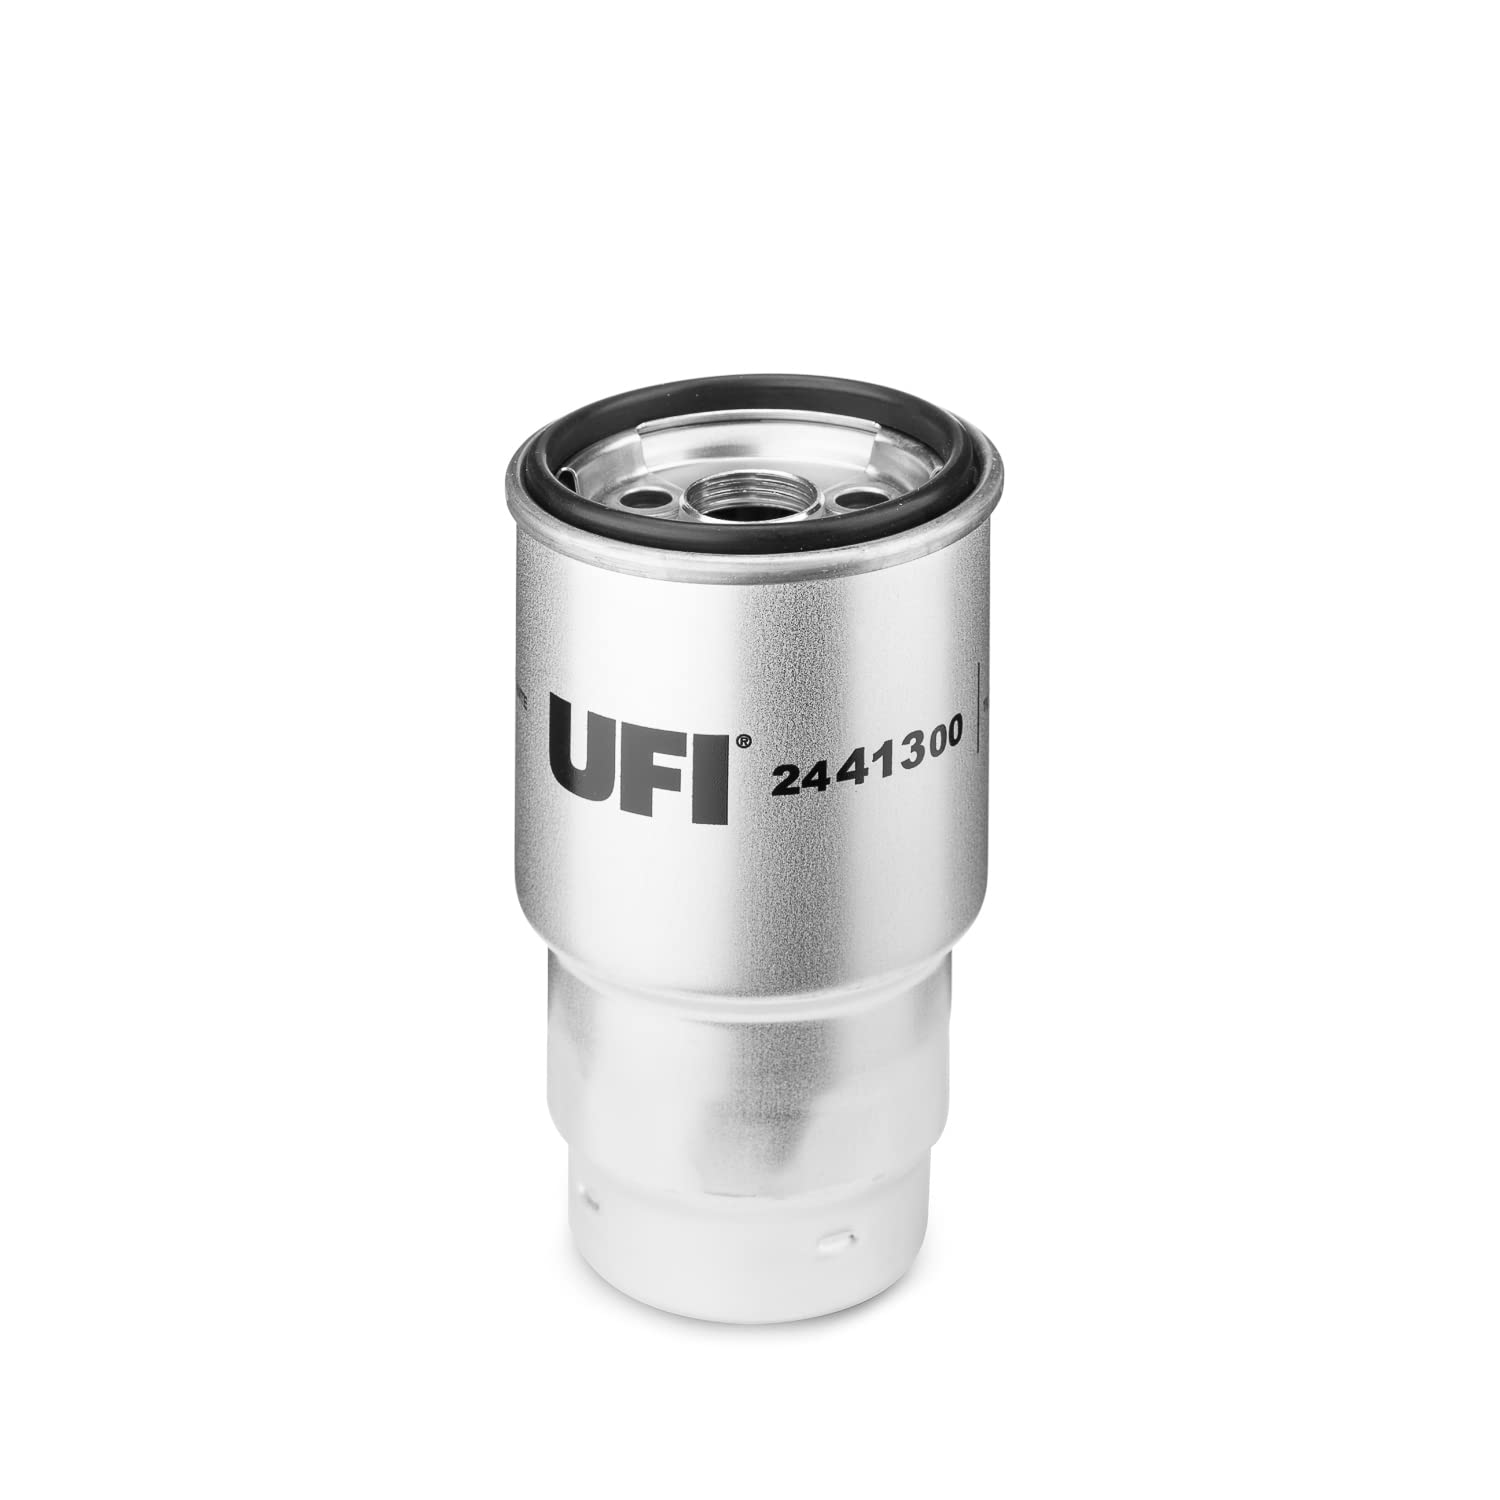 UFI FILTERS Filters 24.413.00 Dieselfilter von UFI